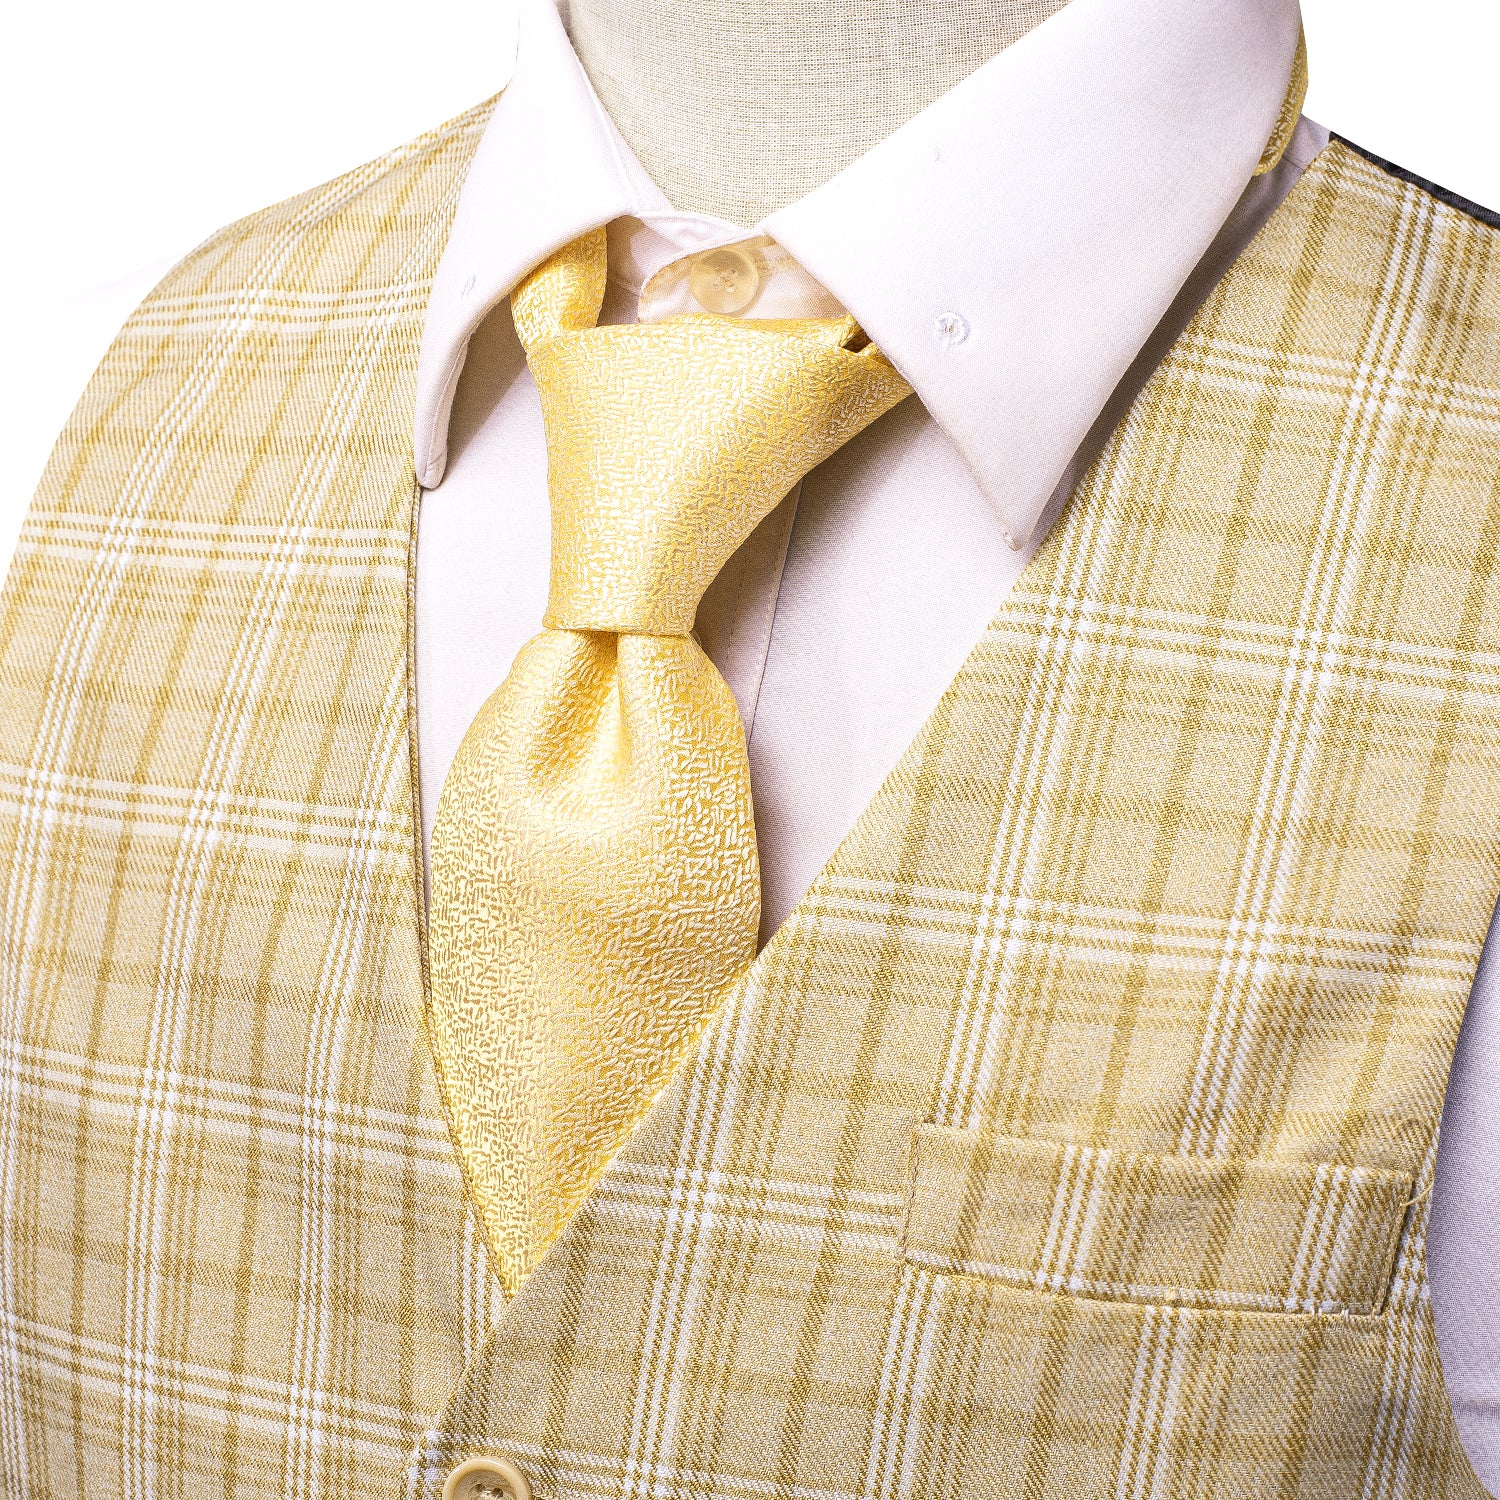 Light Yellow White Plaid Silk England Style Men's Single Vest Waistcoat